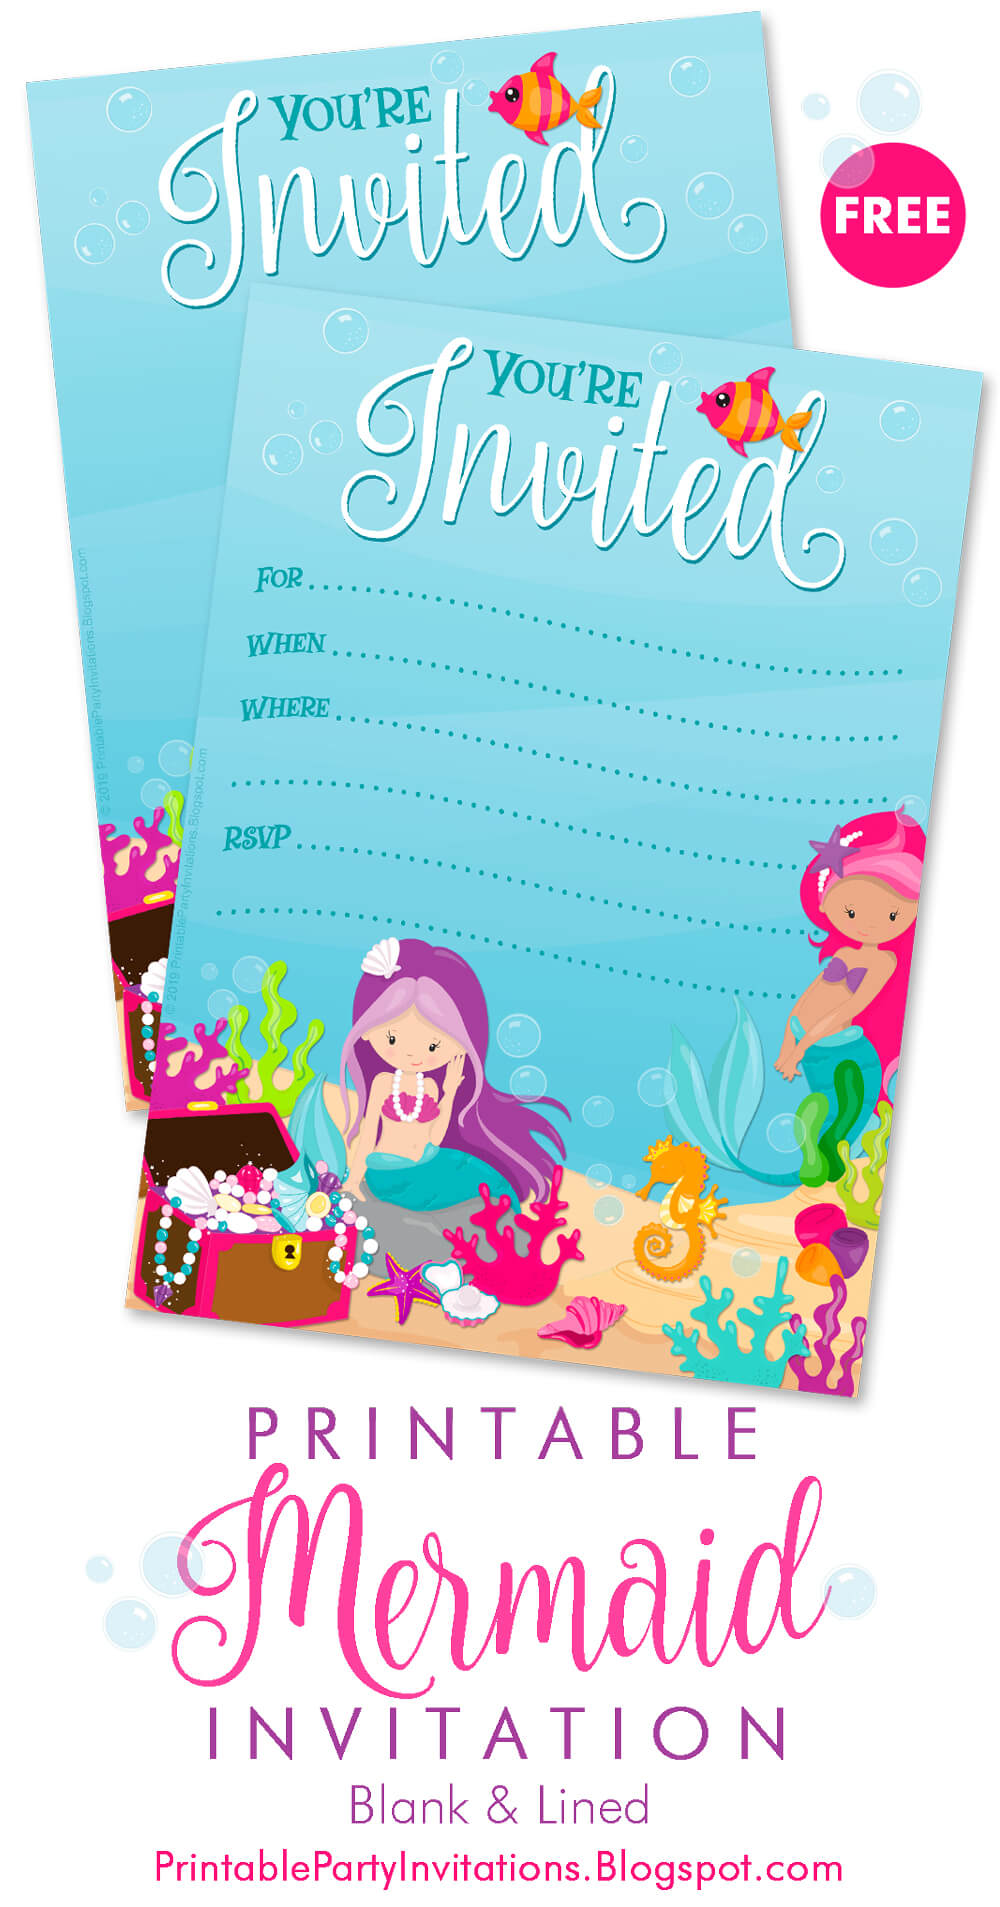 Free Printable Party Invitations: FREE Mermaid Invitations